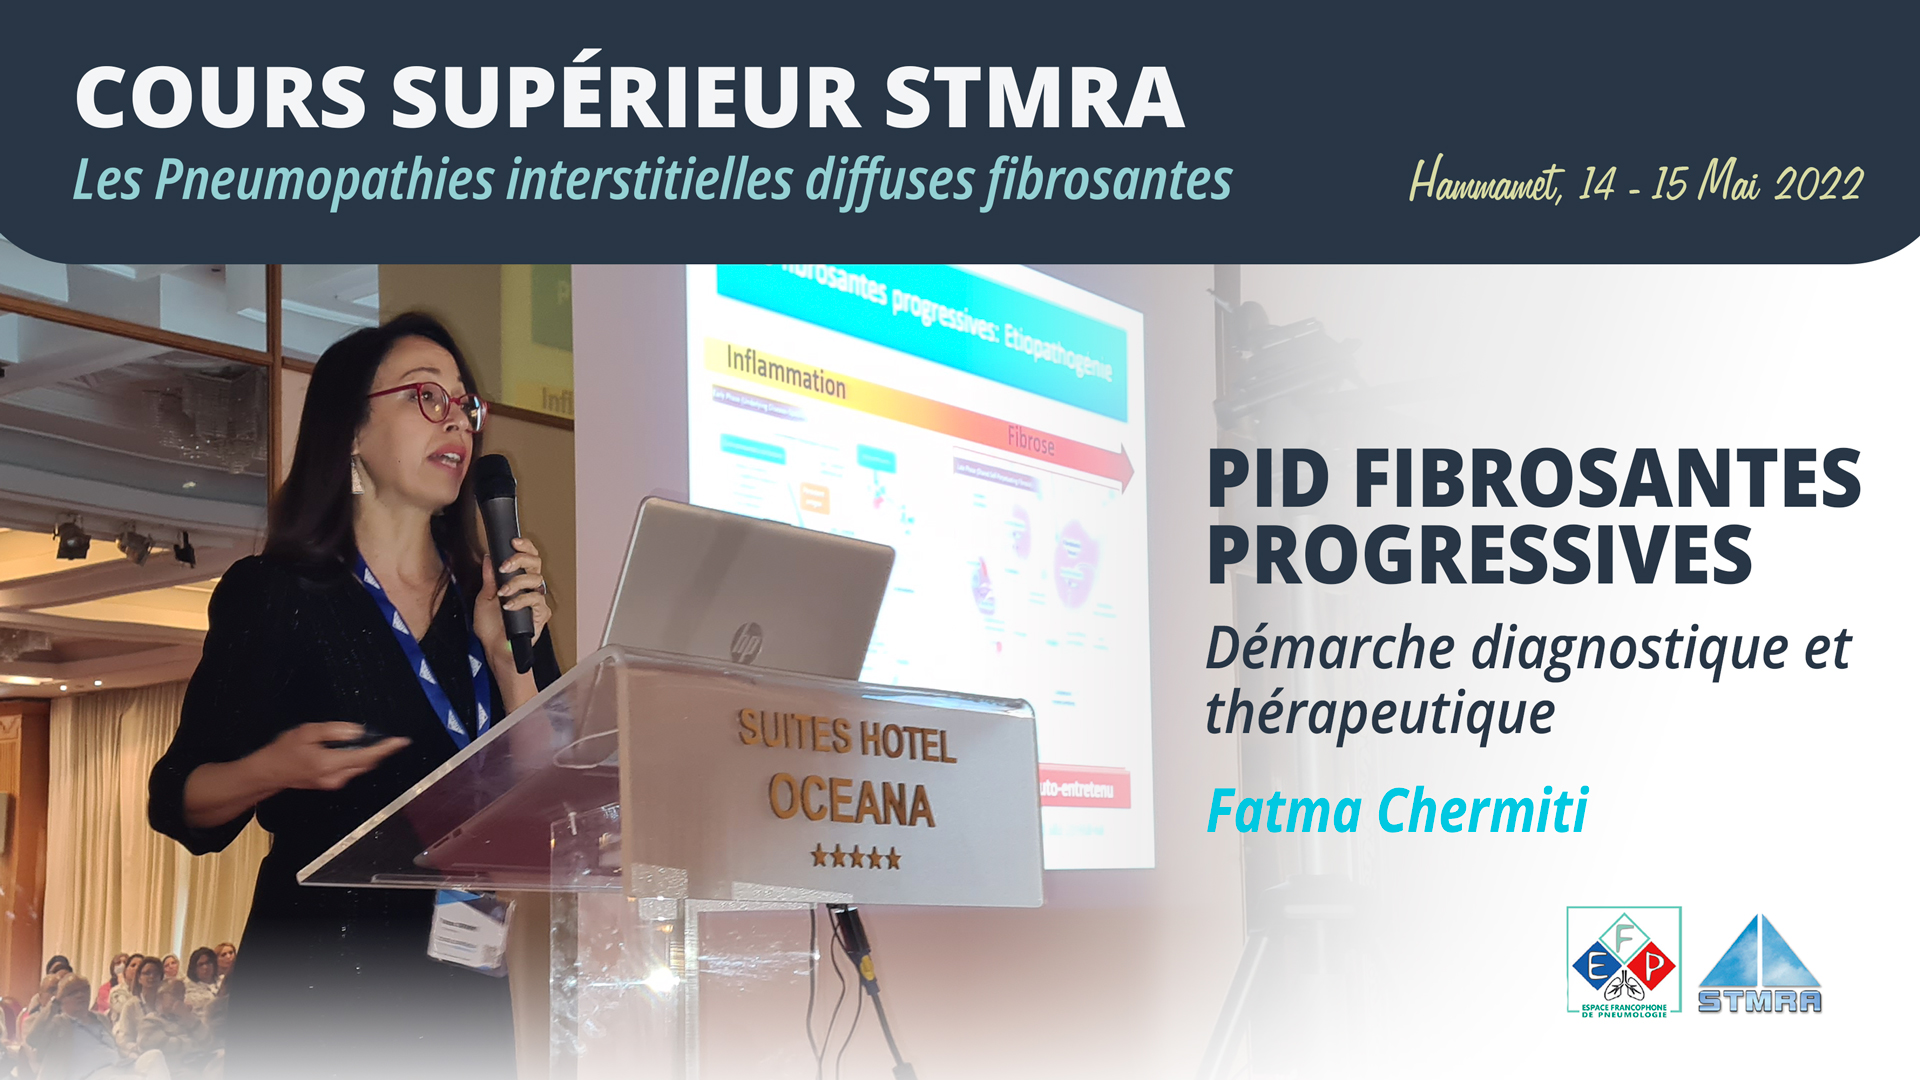 Les PID fibrosantes progressives : démarche diagnostique et traitement. Fatma Chermiti